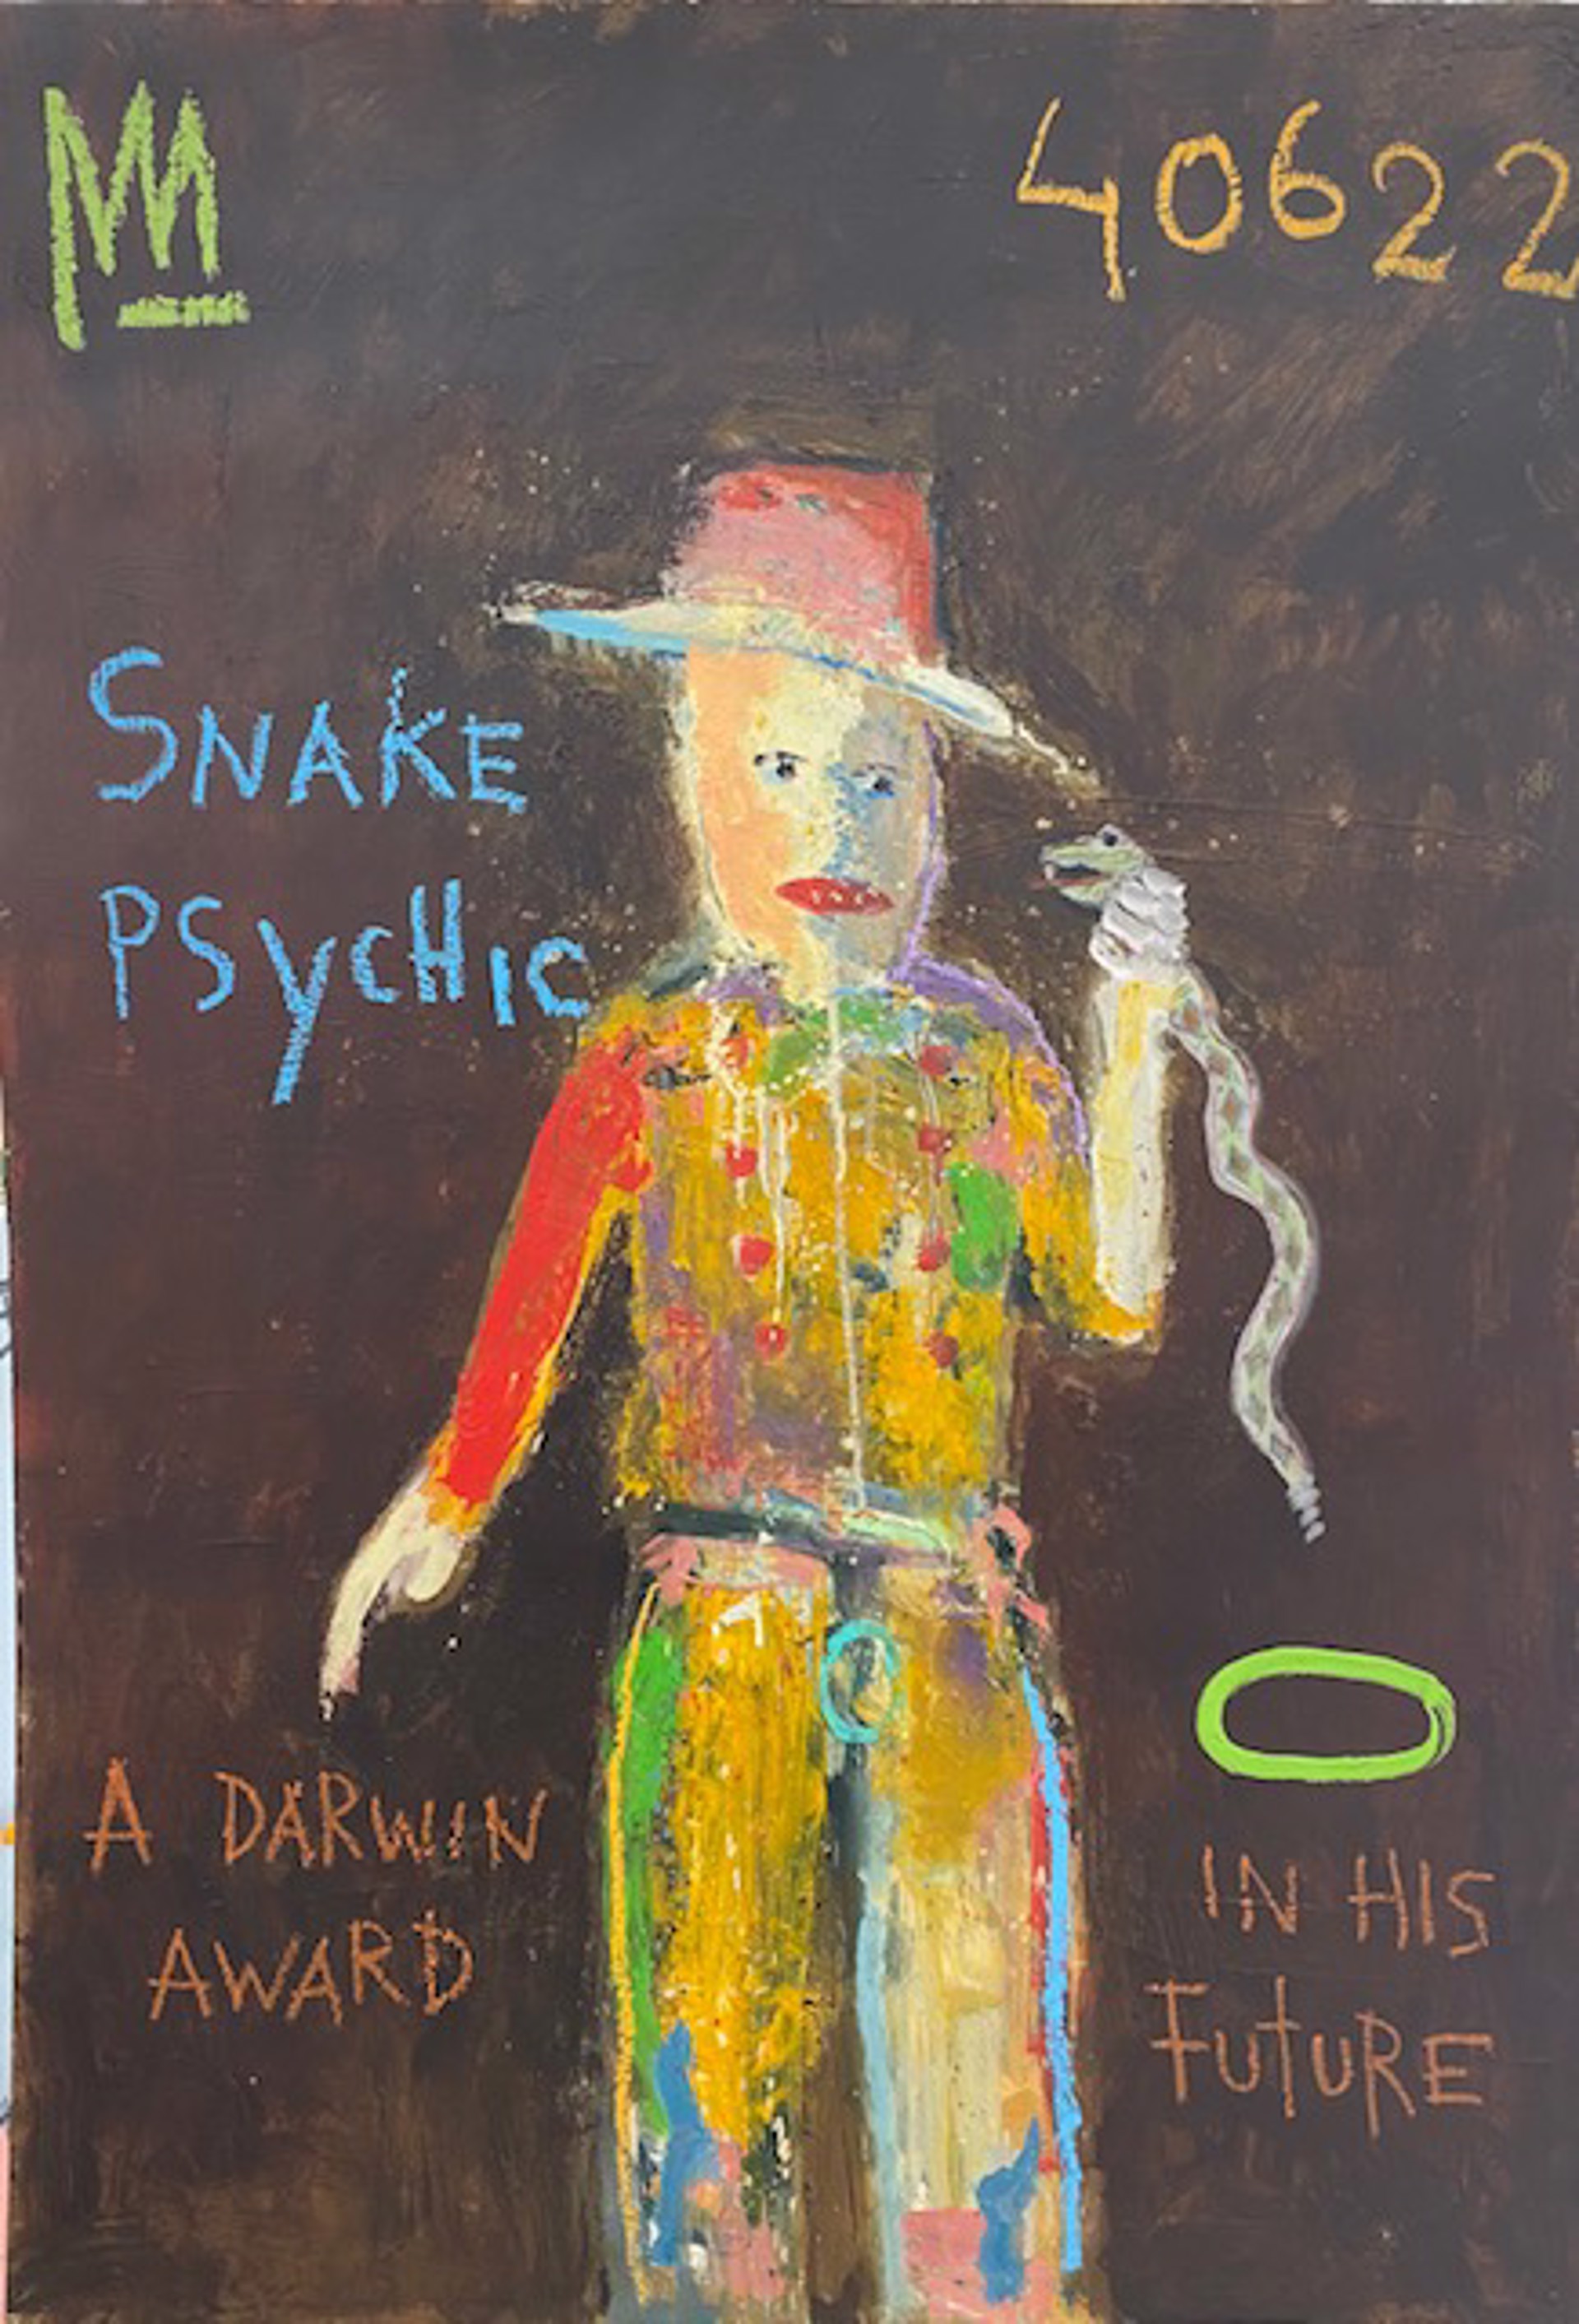 Snake Psychic by Michael Snodgrass